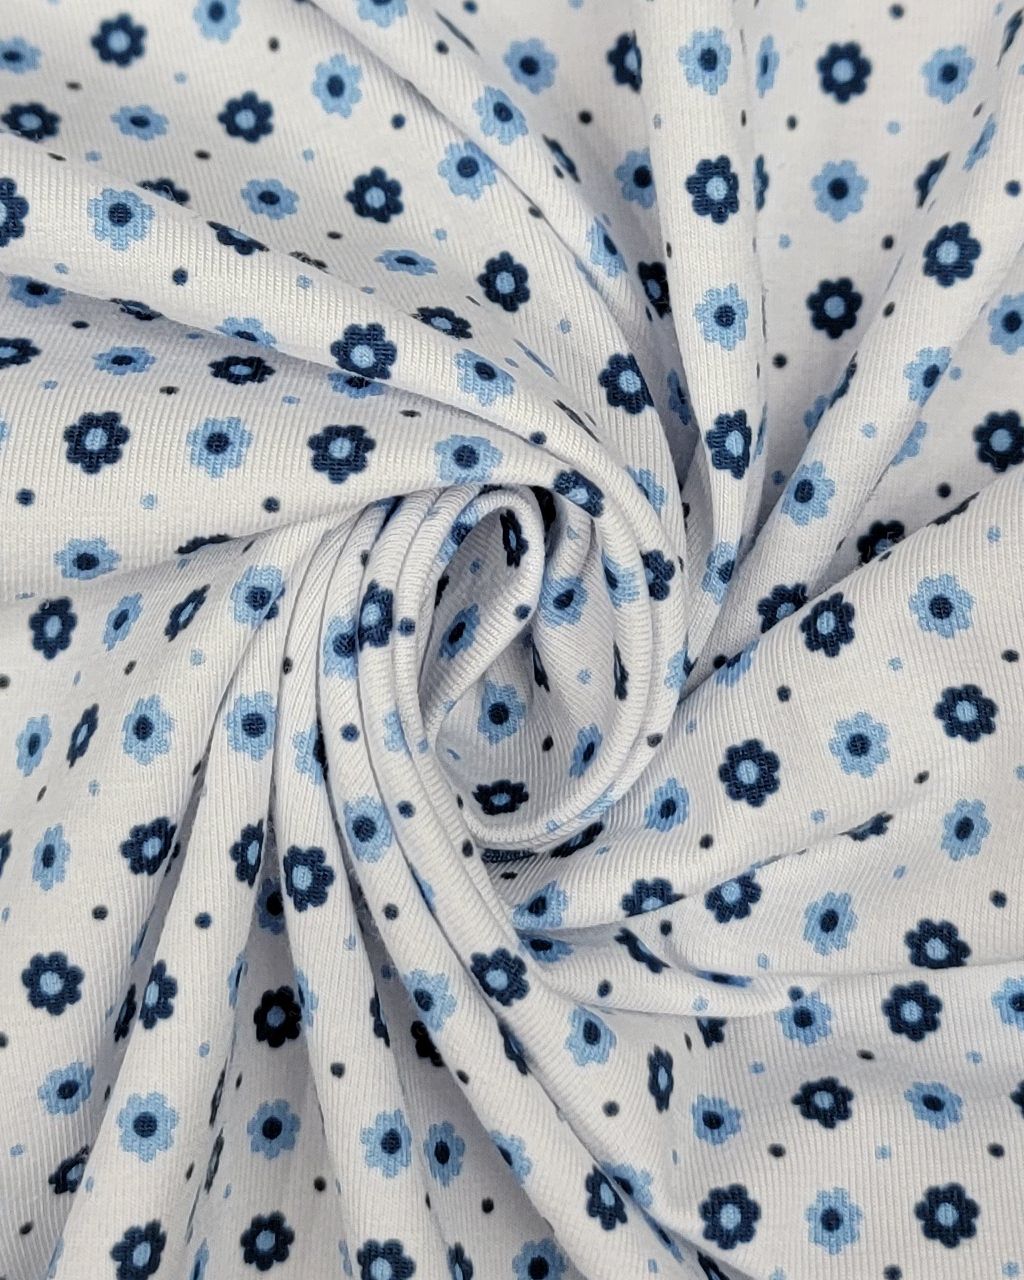 7 Downie St. Short Sleeve Sport Shirt in Blue Mini Floral Pattern